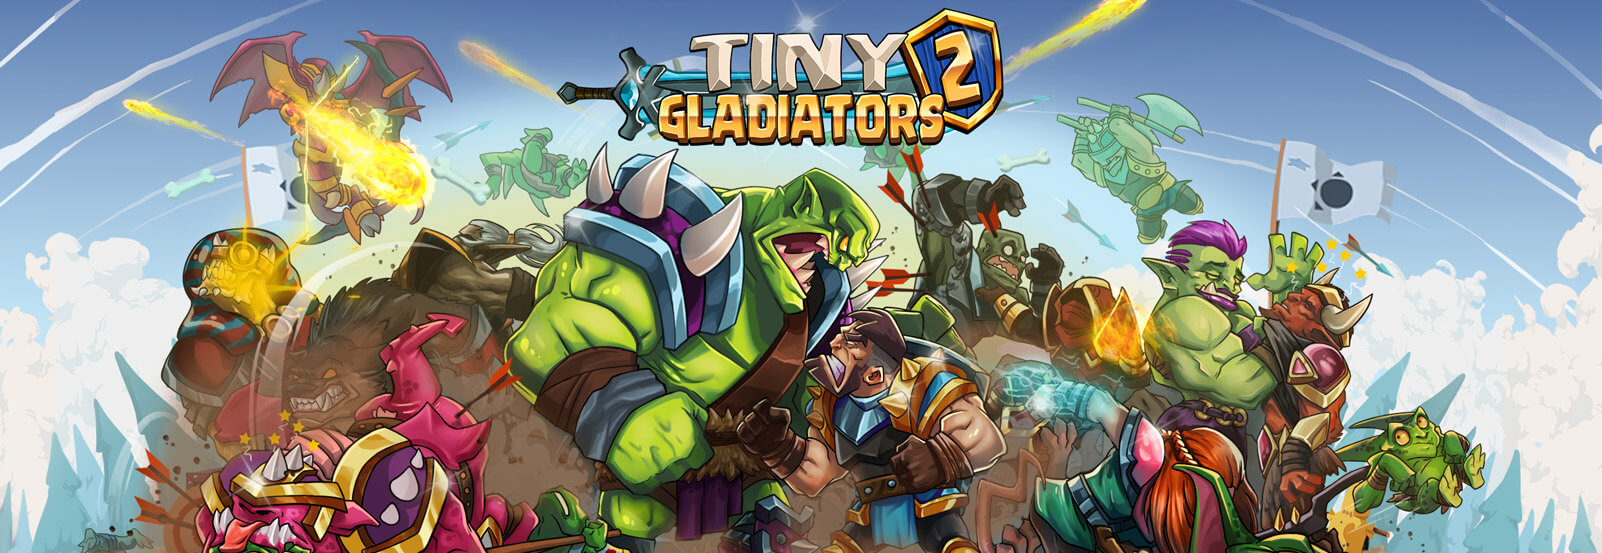 Tiny gladiators 2